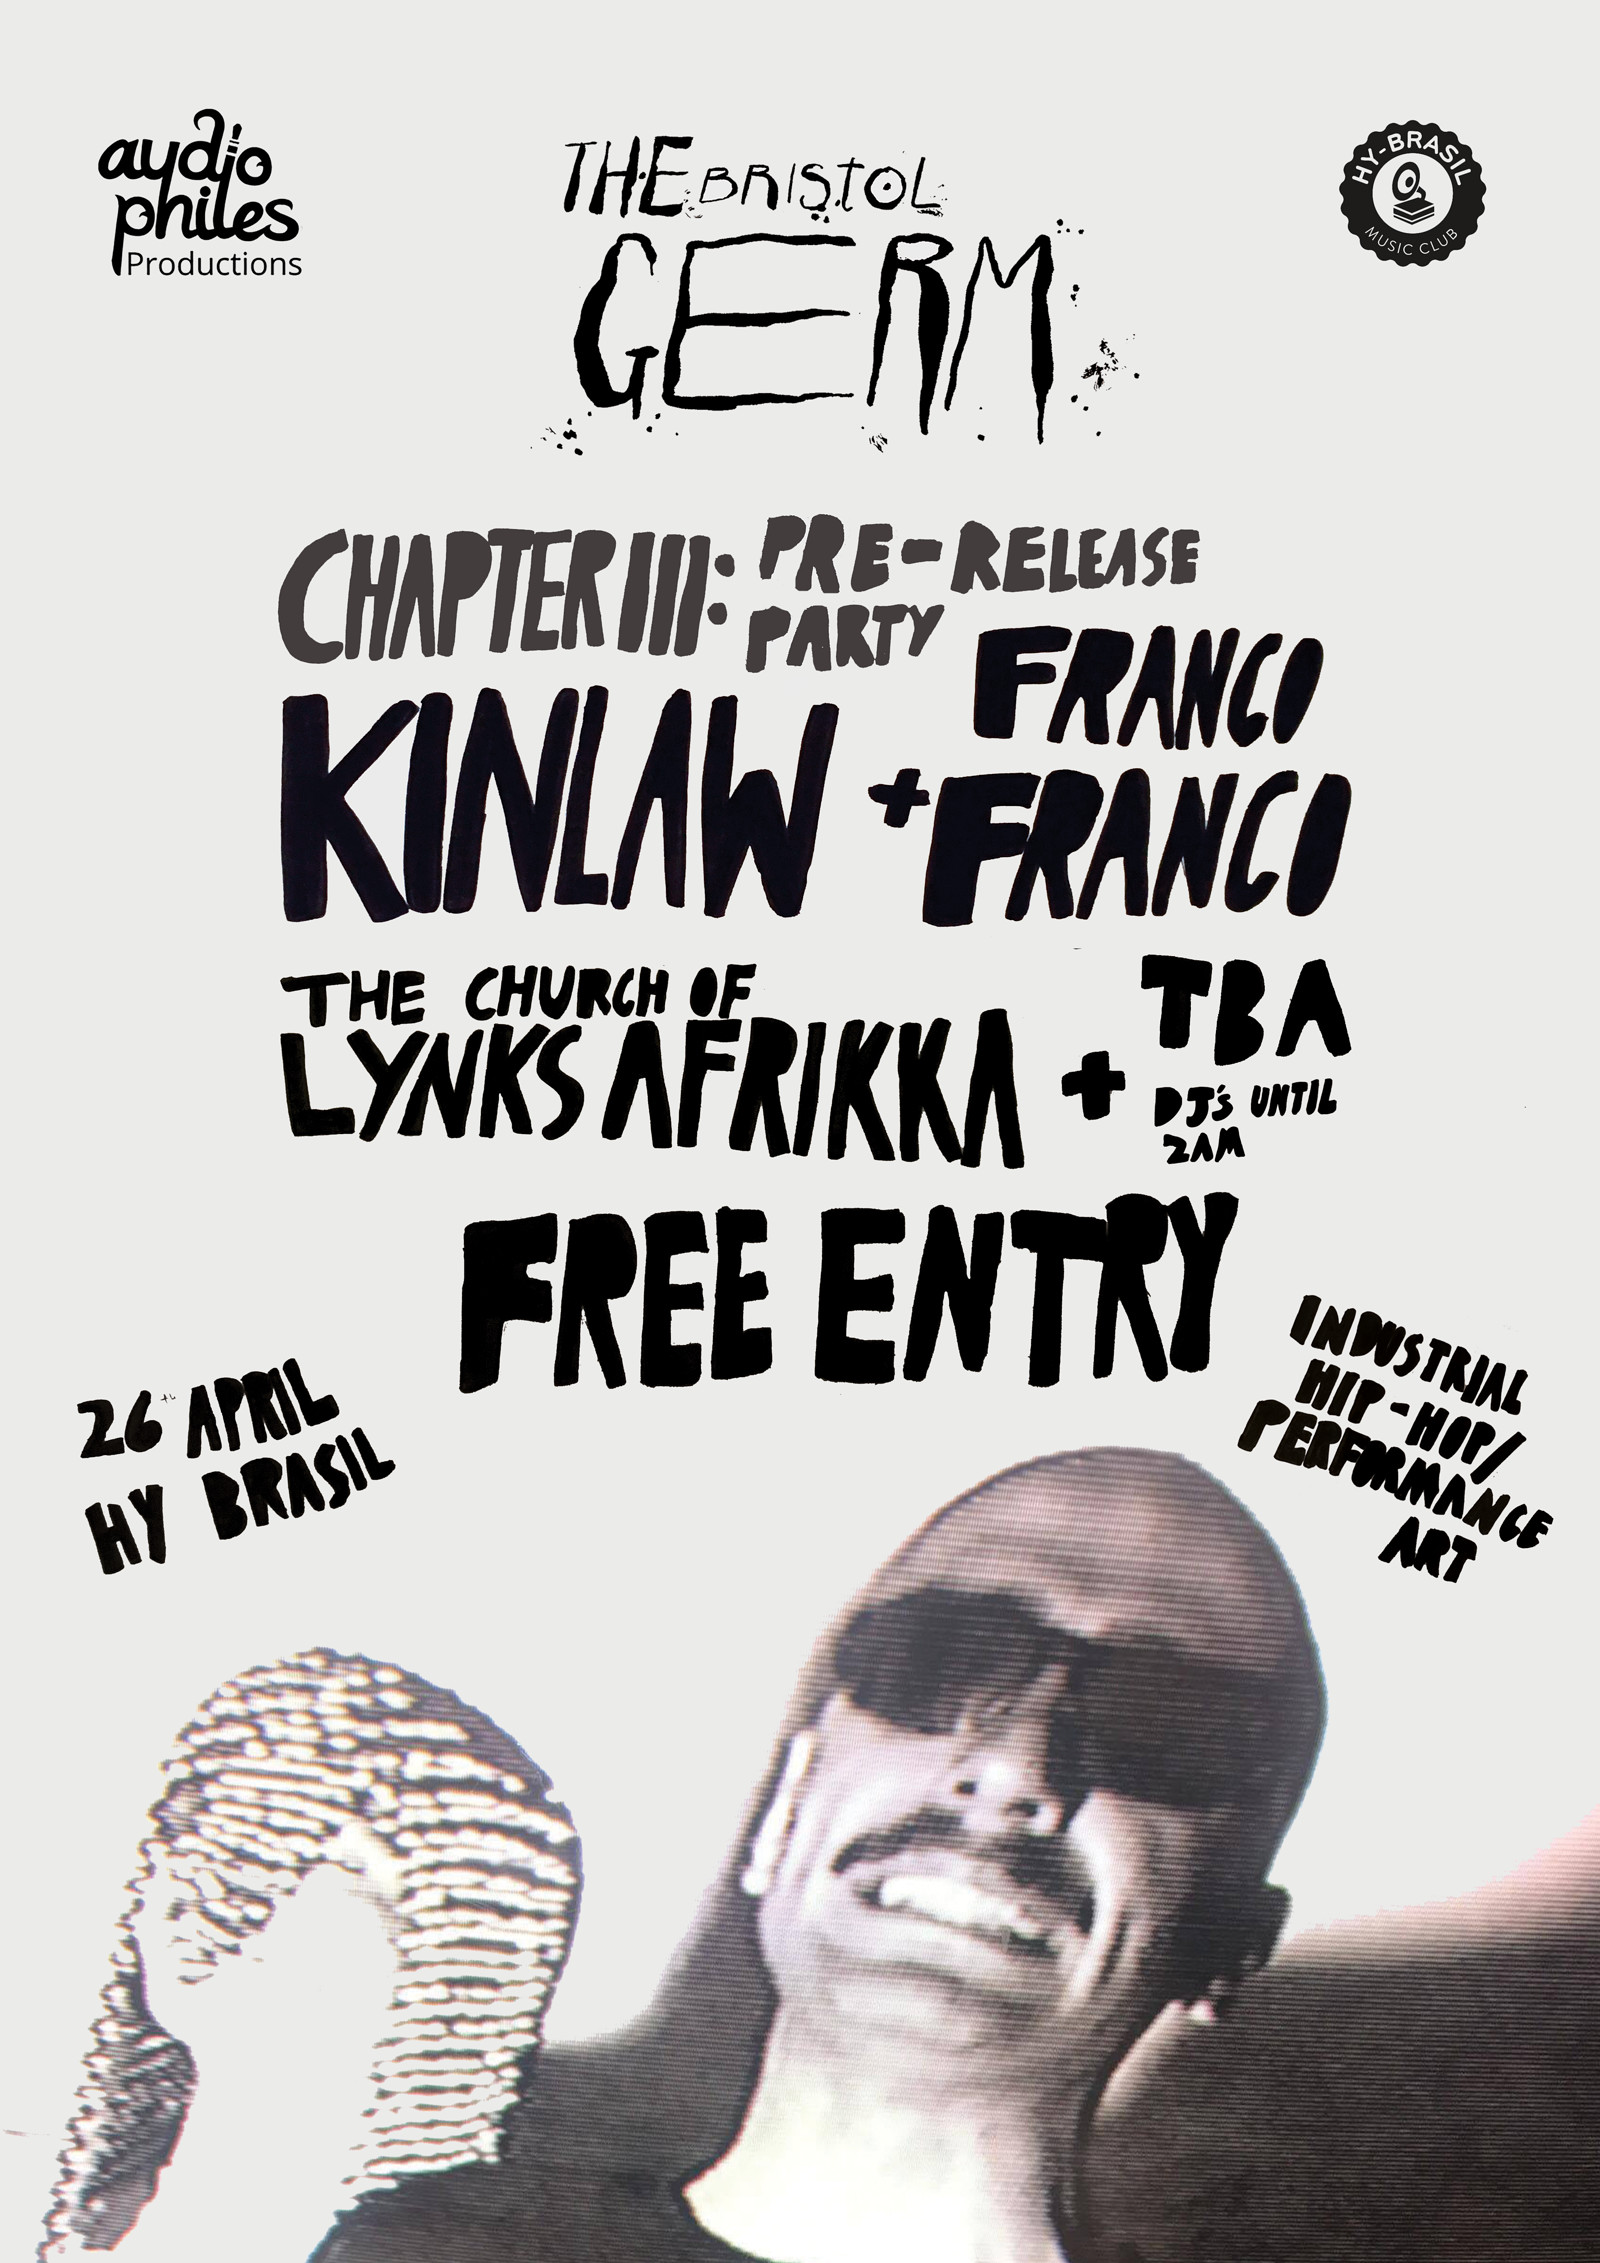 Kinlaw+Franco Franco, Lynks Afrika at Hy Brasil Music Club